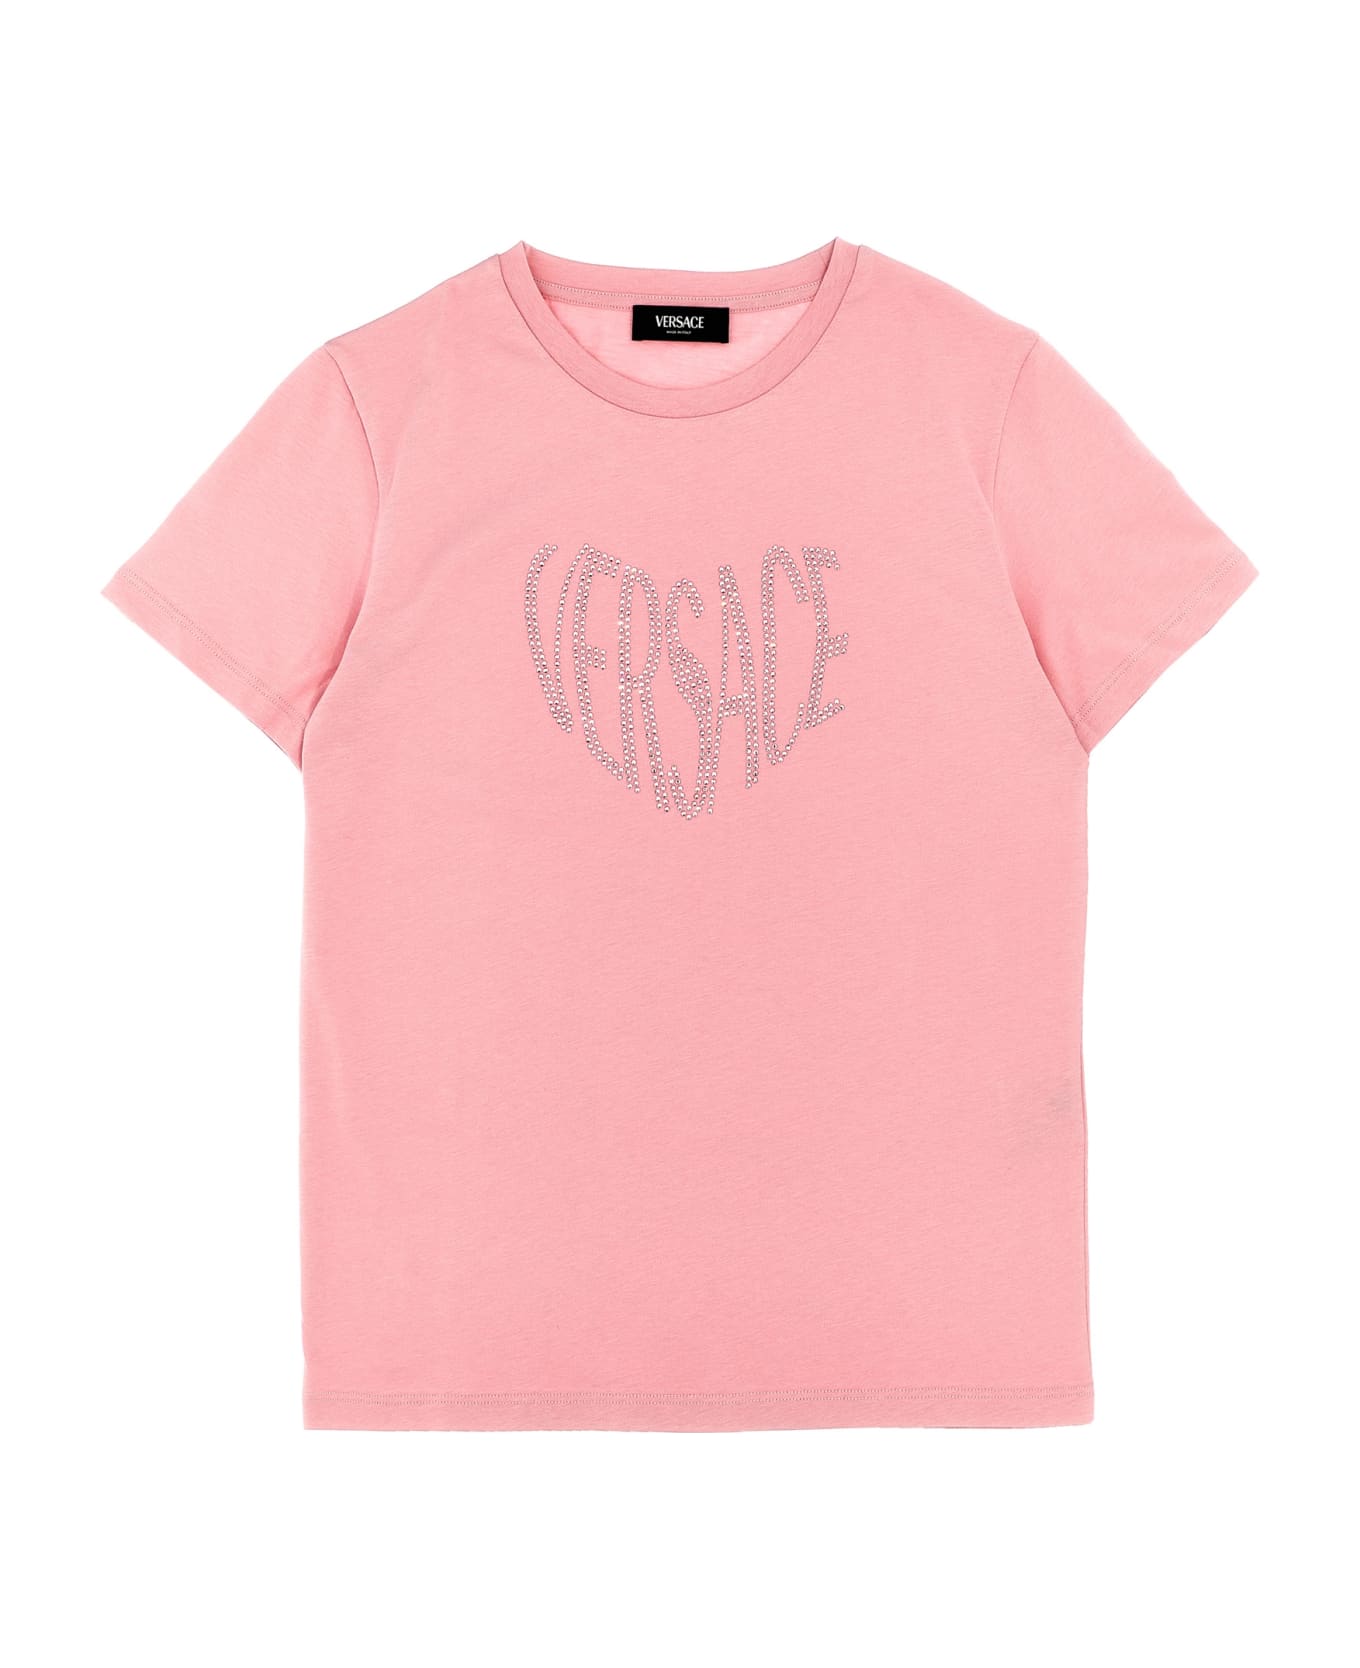 Versace Rhinestone Logo T-shirt - Rosa